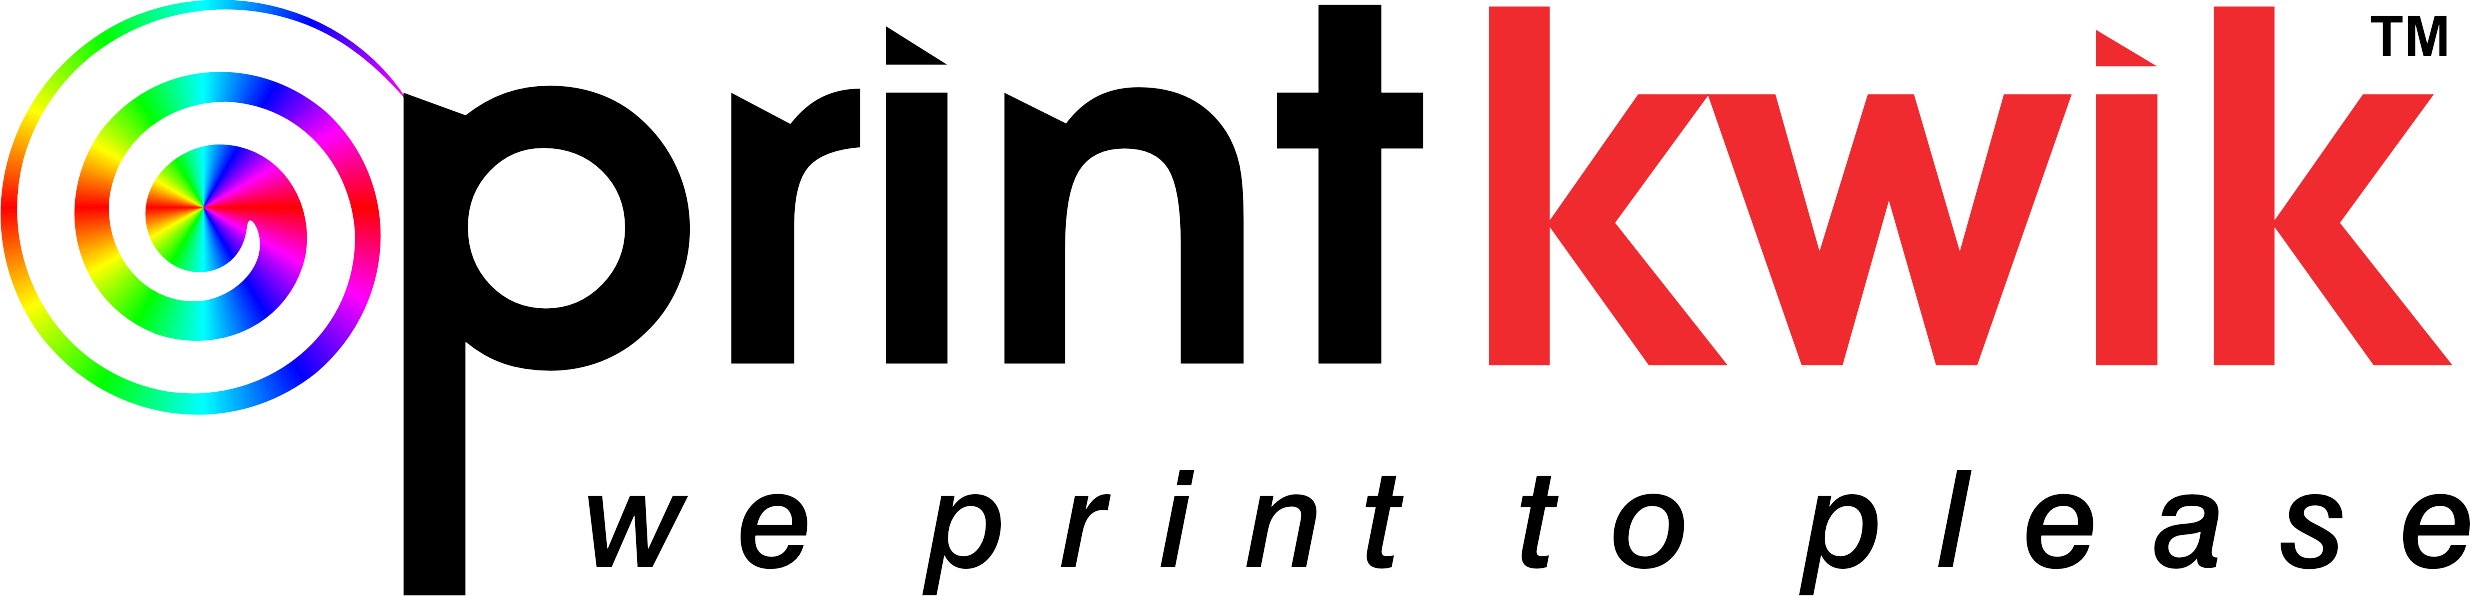 printkwik logo